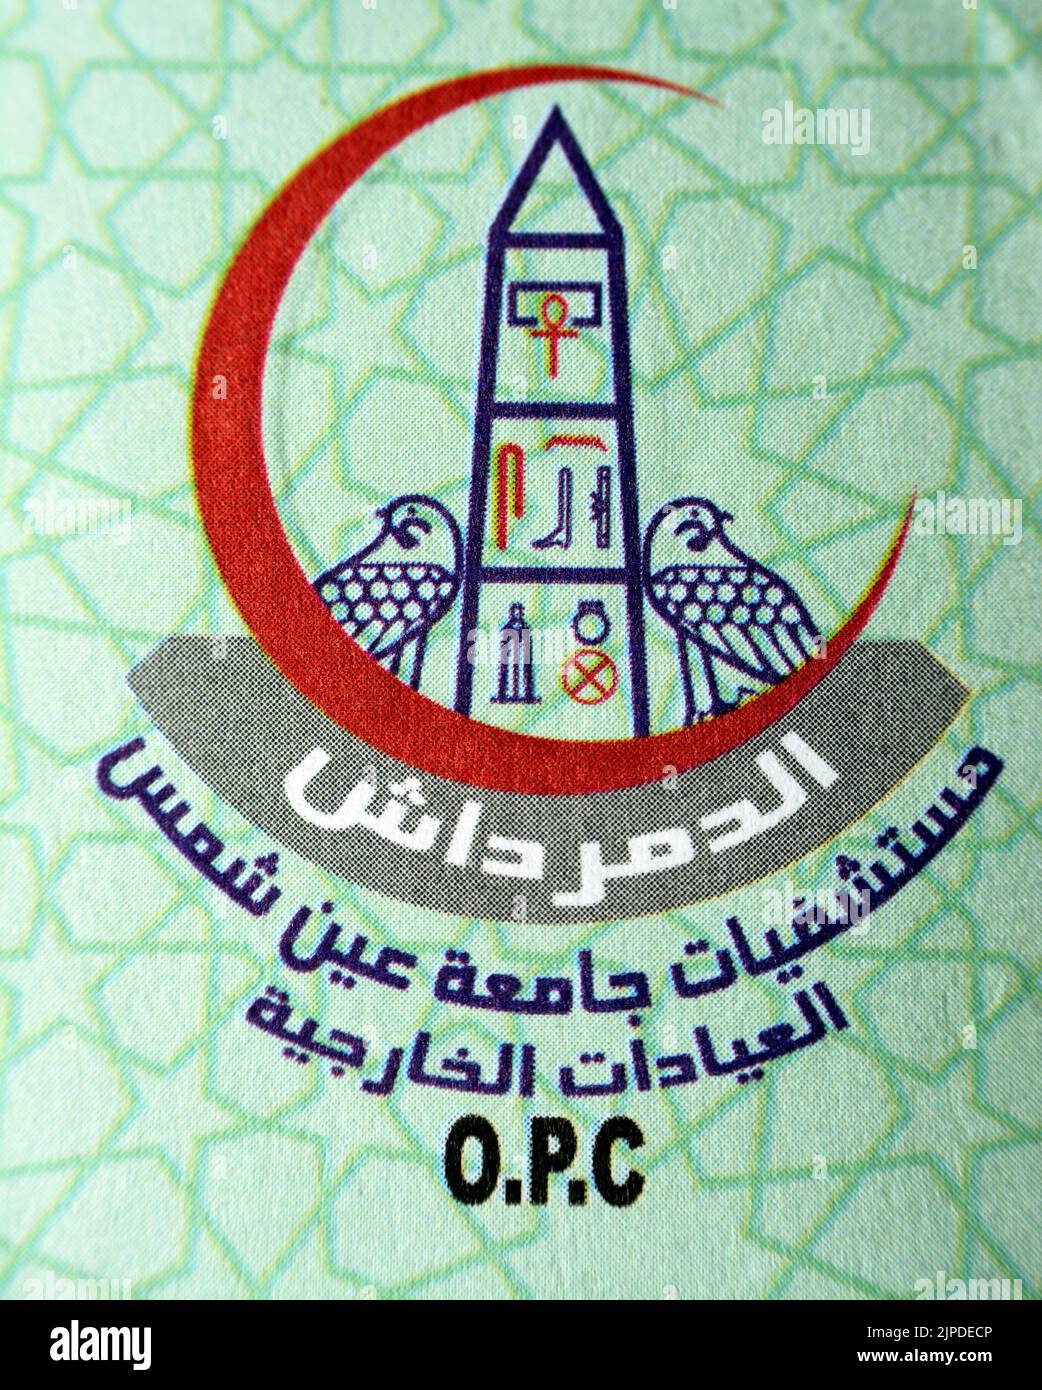 Cairo, Egypt, April 15 2022: A university hospitals logo, Translation of Arabic text ( El Demerhash, Ain shams university hospitals, outpatient clinic Stock Photo